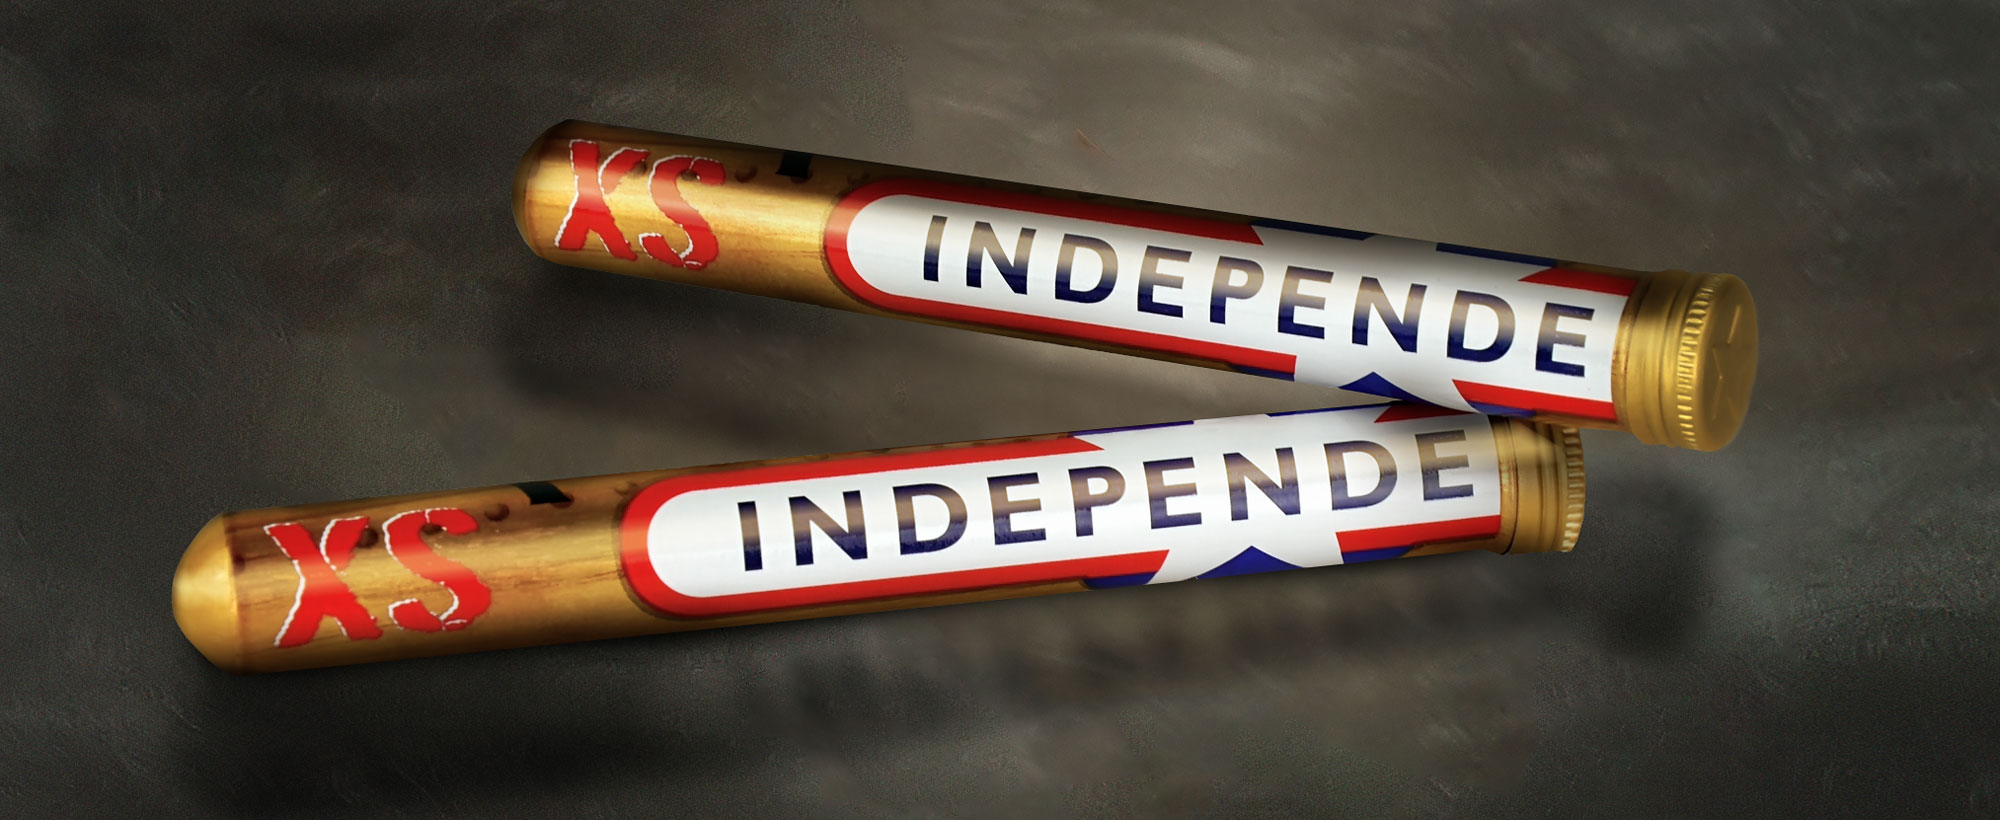 Independence XS Xtreme Zigarre